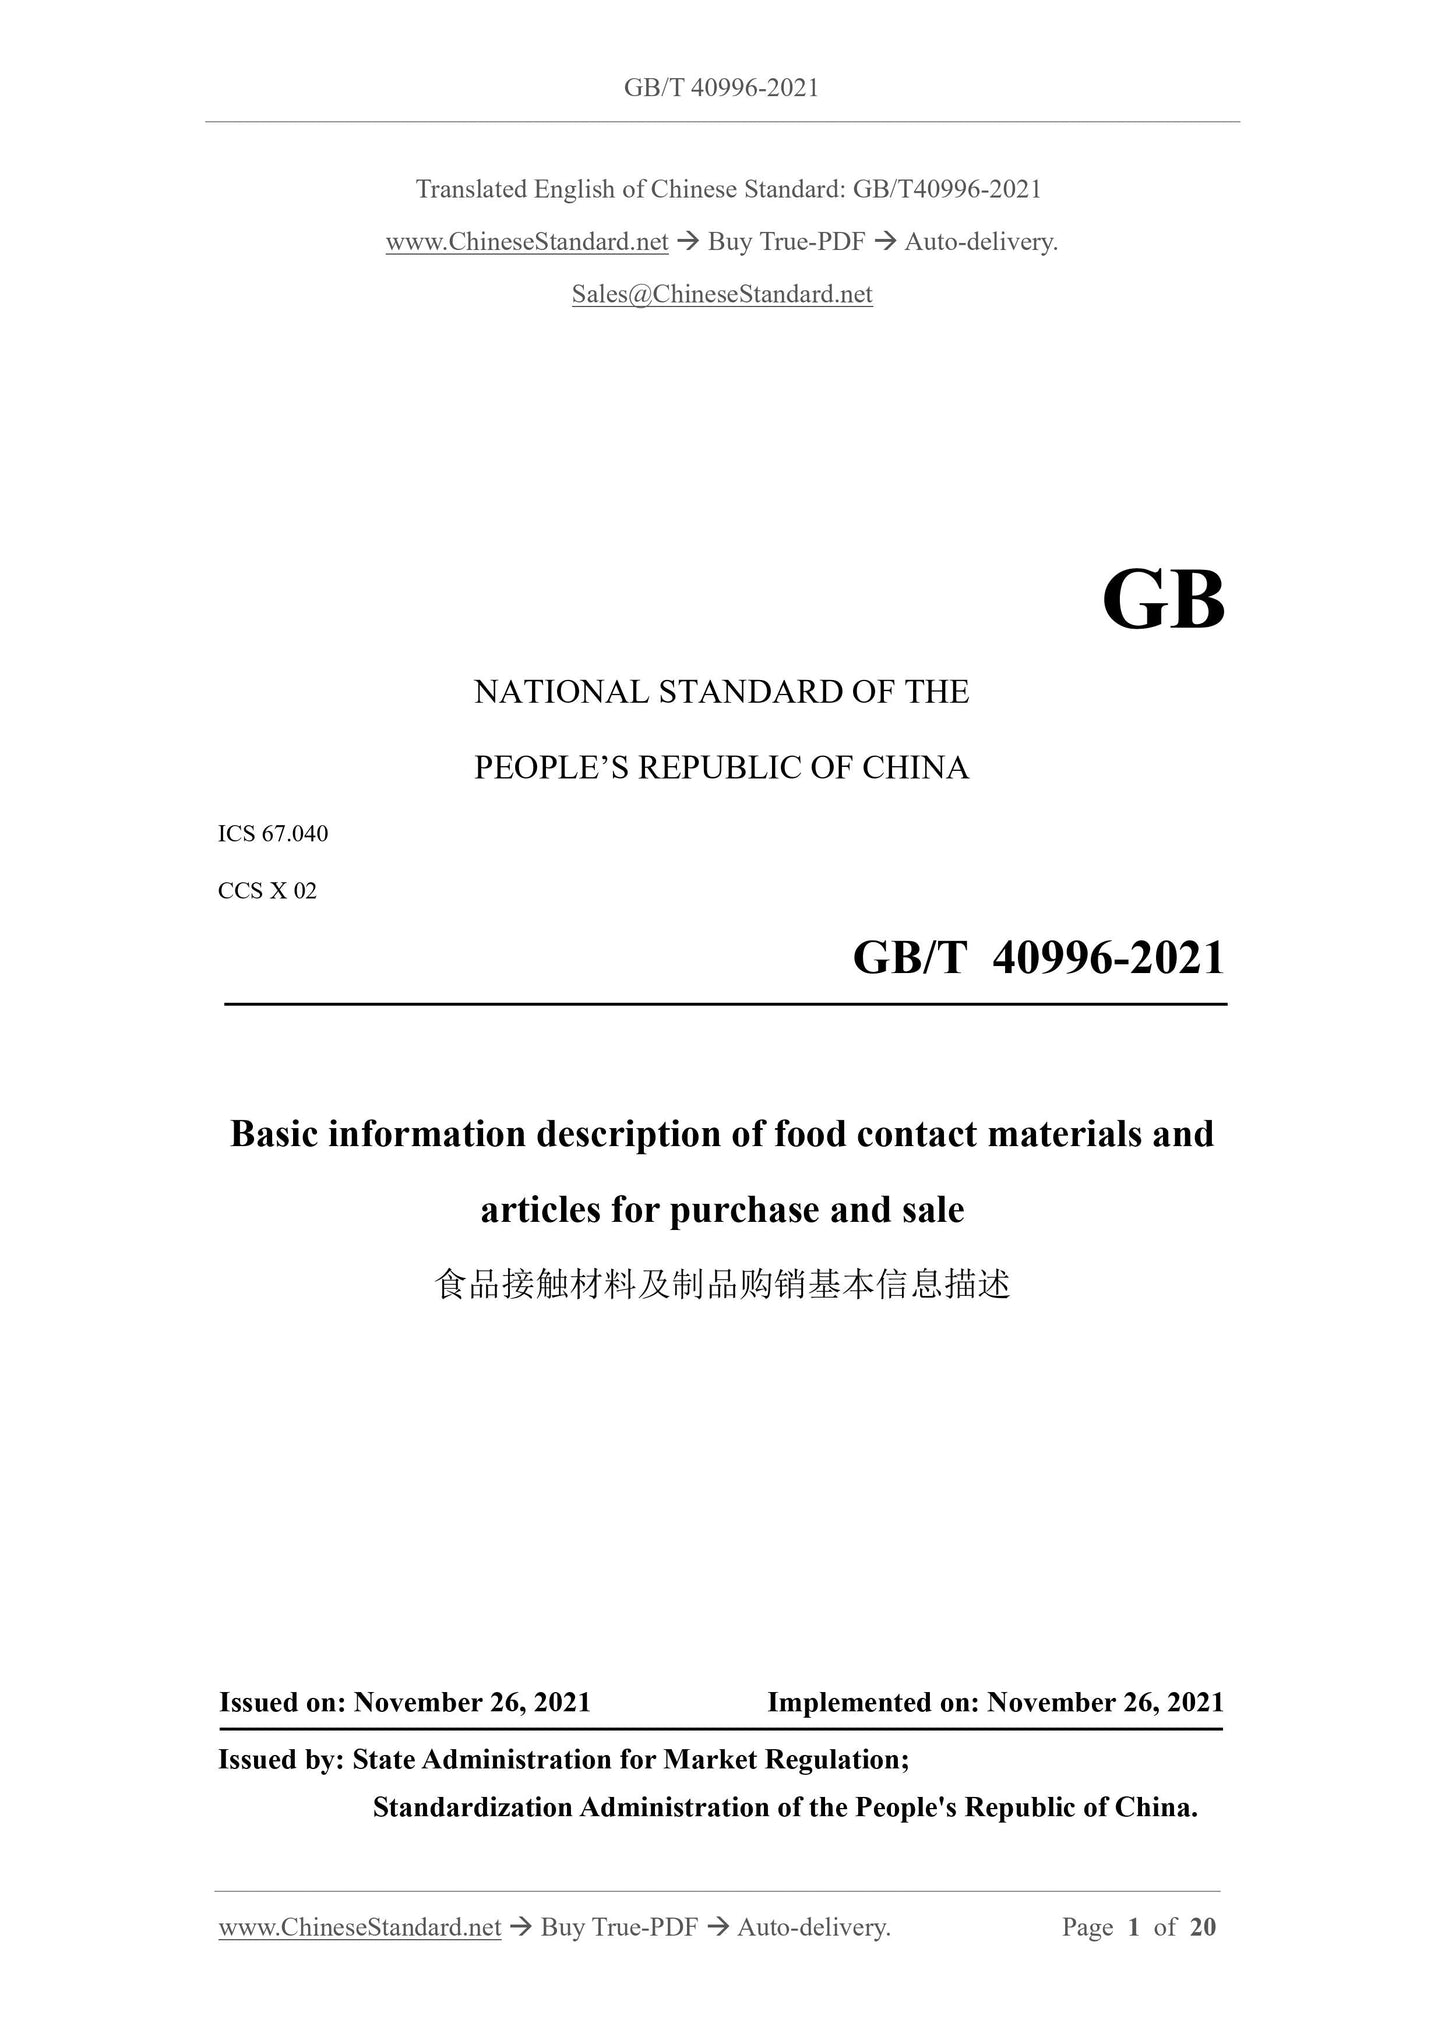 GBT40996-2021 Page 1